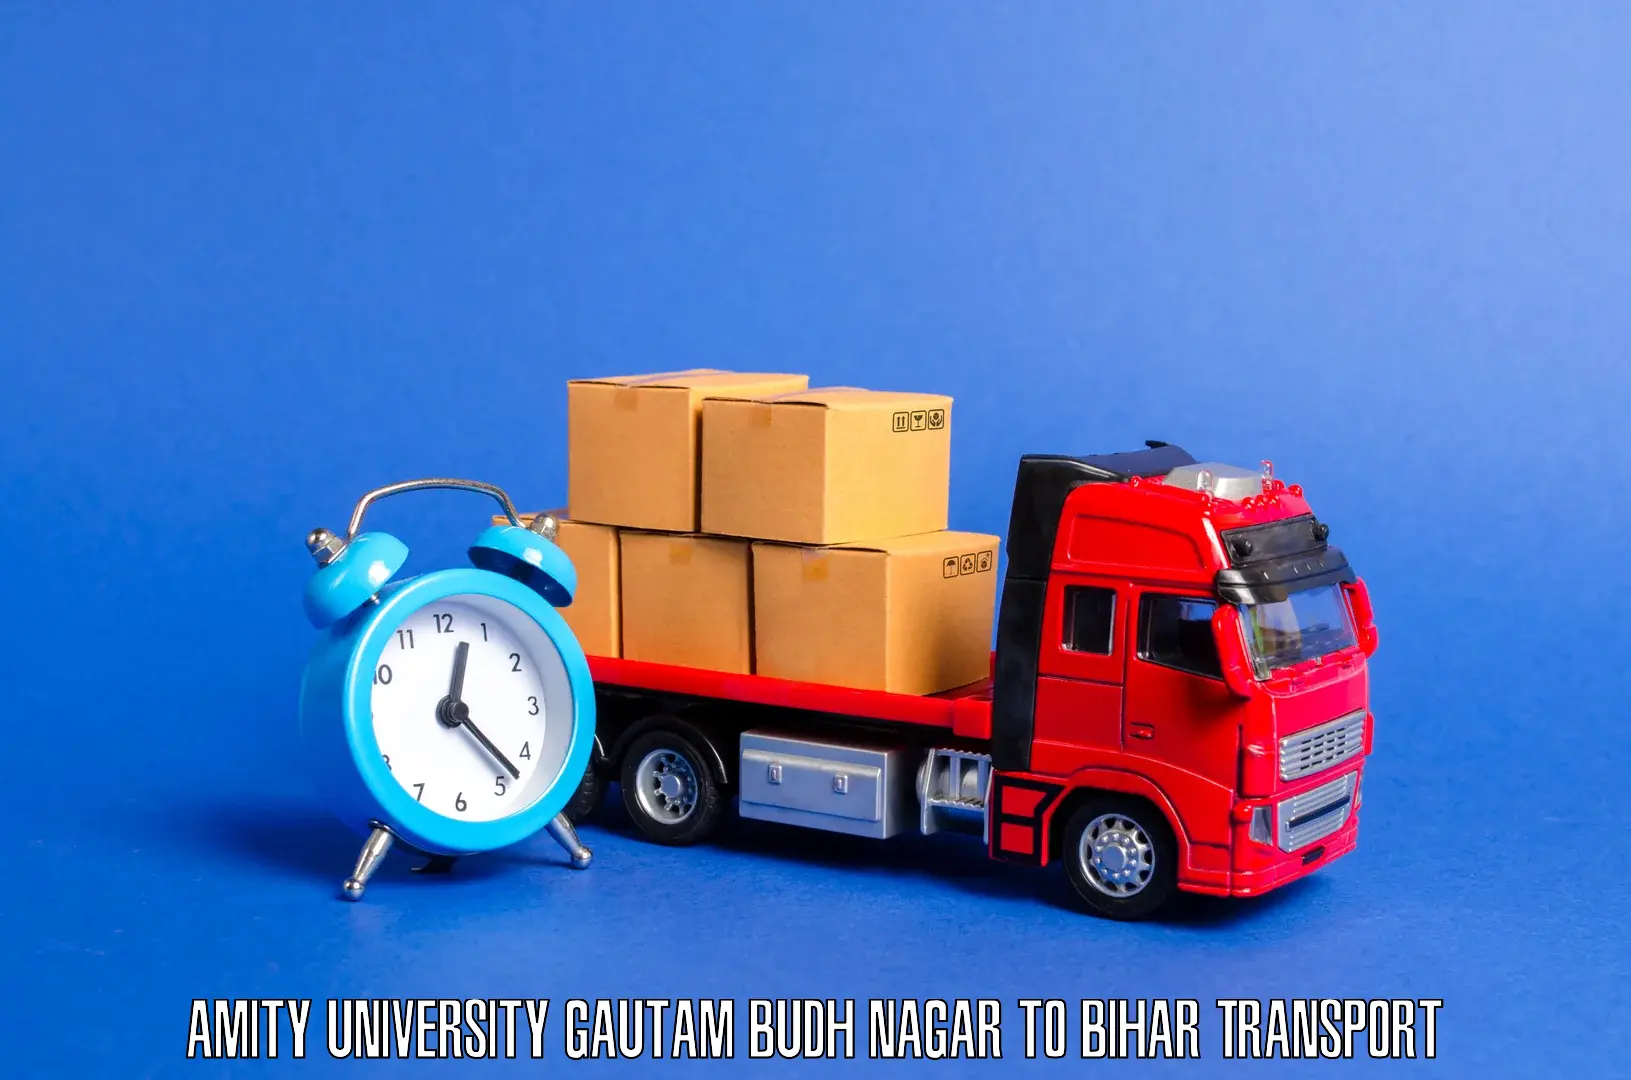 Furniture transport service Amity University Gautam Budh Nagar to Vaishali